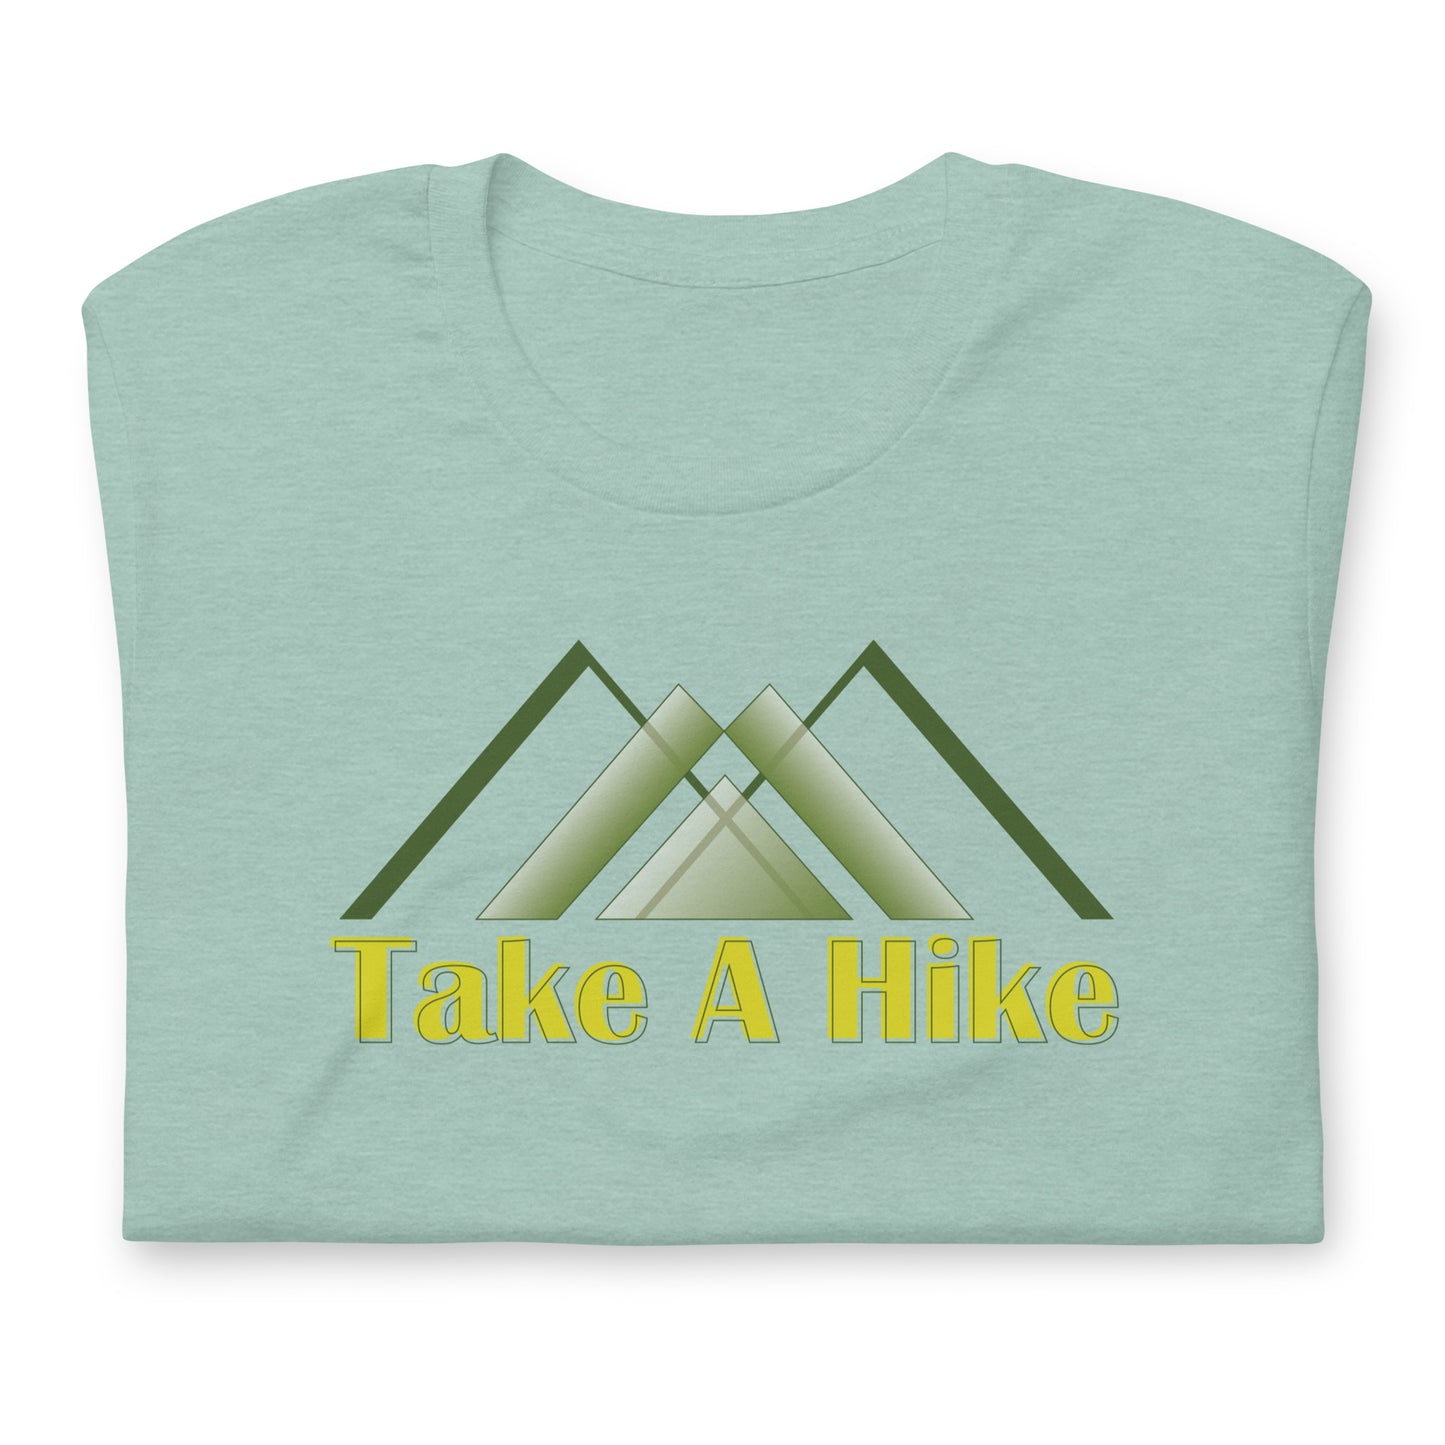 Trailblazer Tee: The Adventurer's Hike Shirt